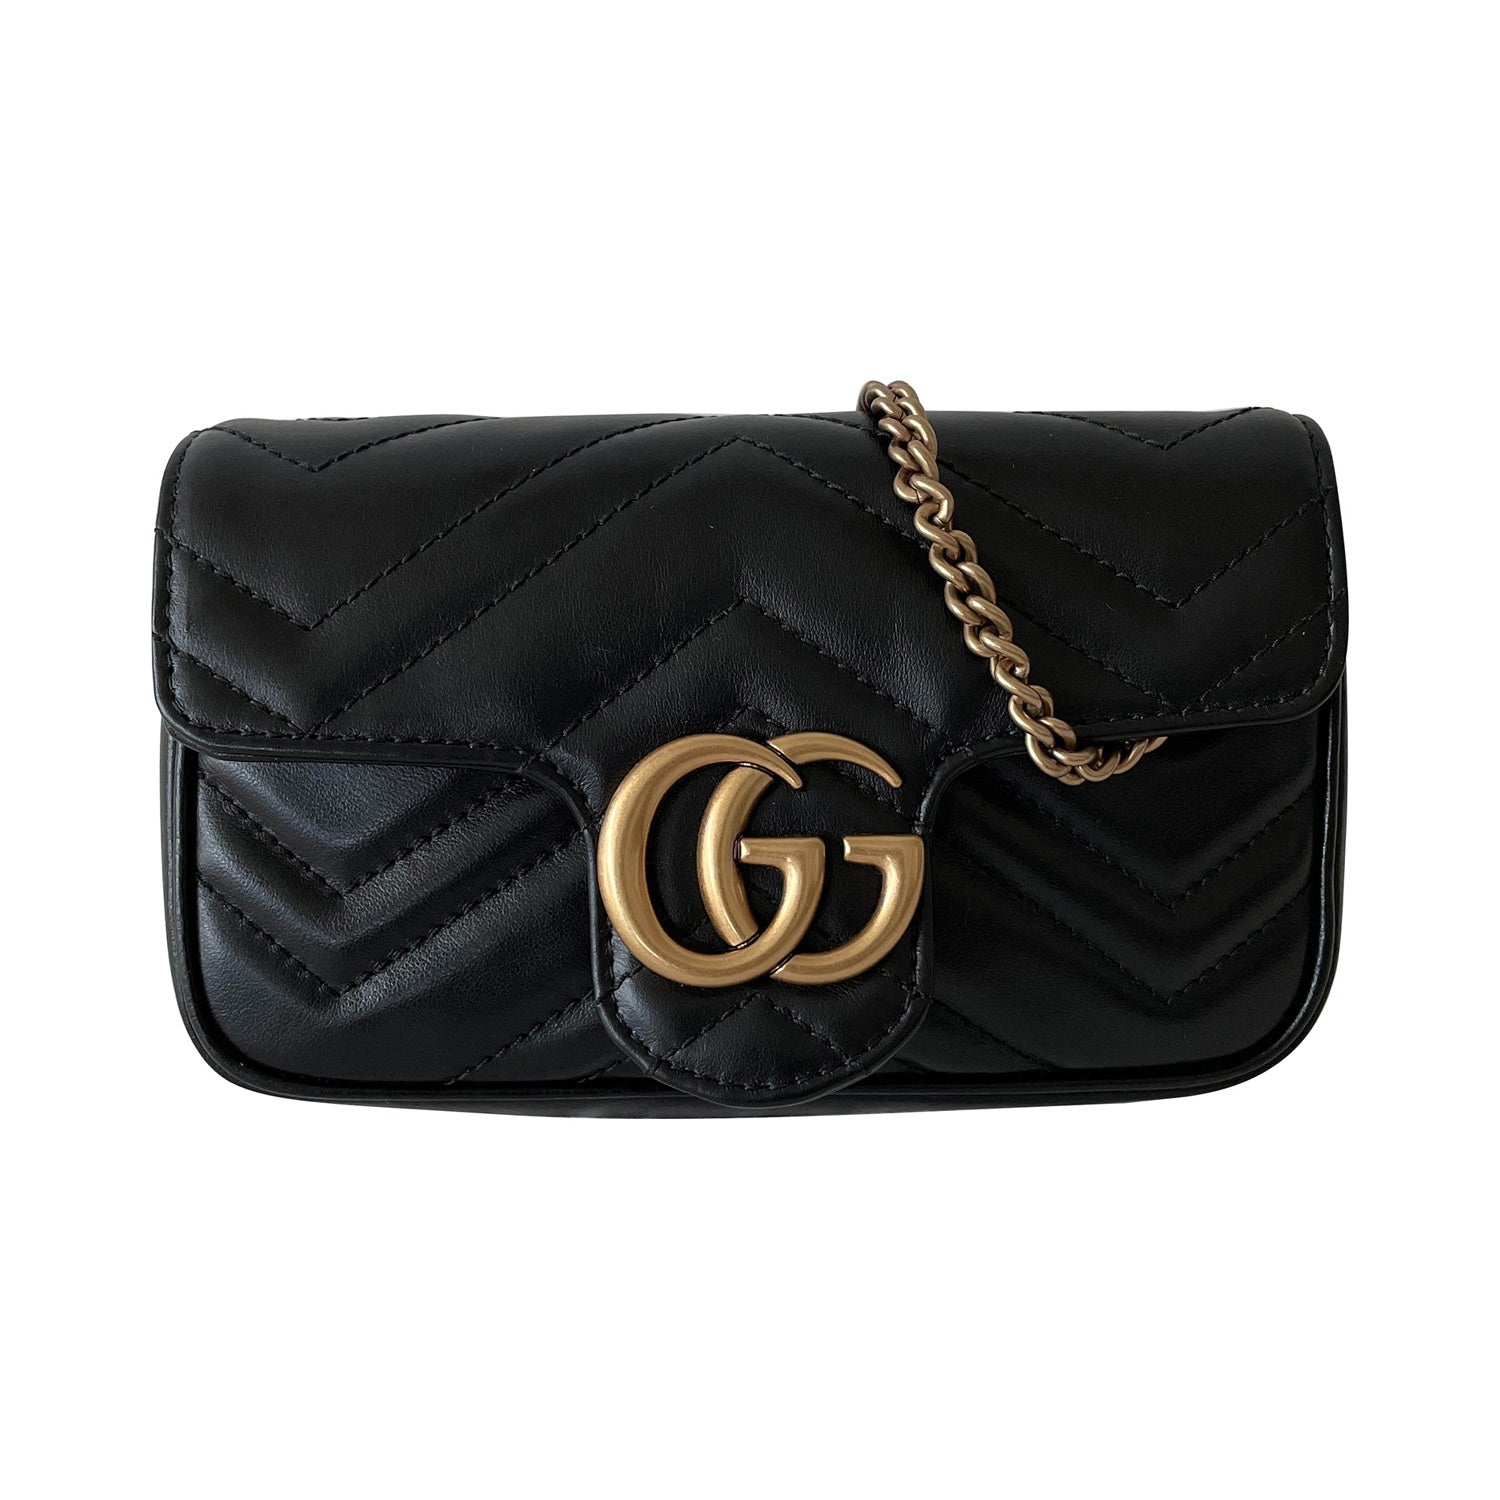 Shop authentic Gucci GG Marmont Matelassé Super Mini Bag at revogue for  just USD 875.00